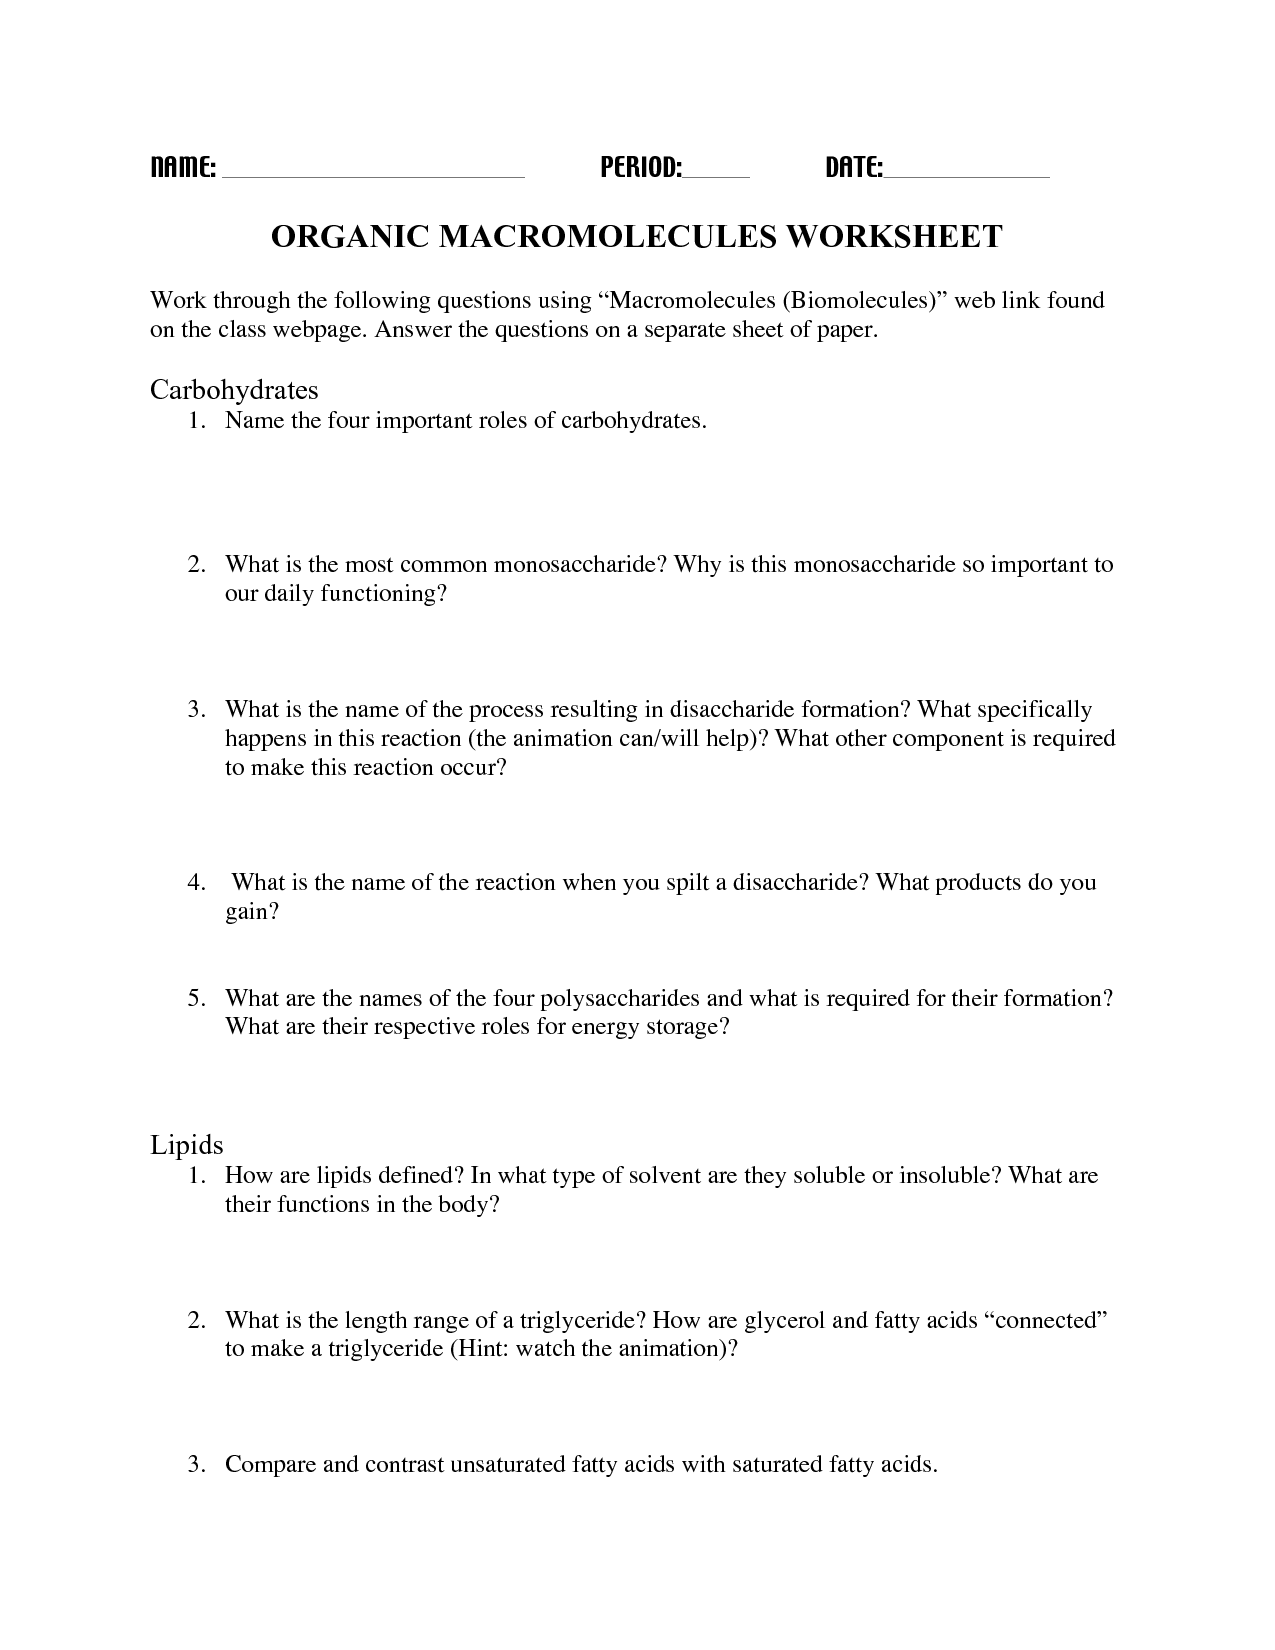 Organic Macromolecules Worksheet Answers